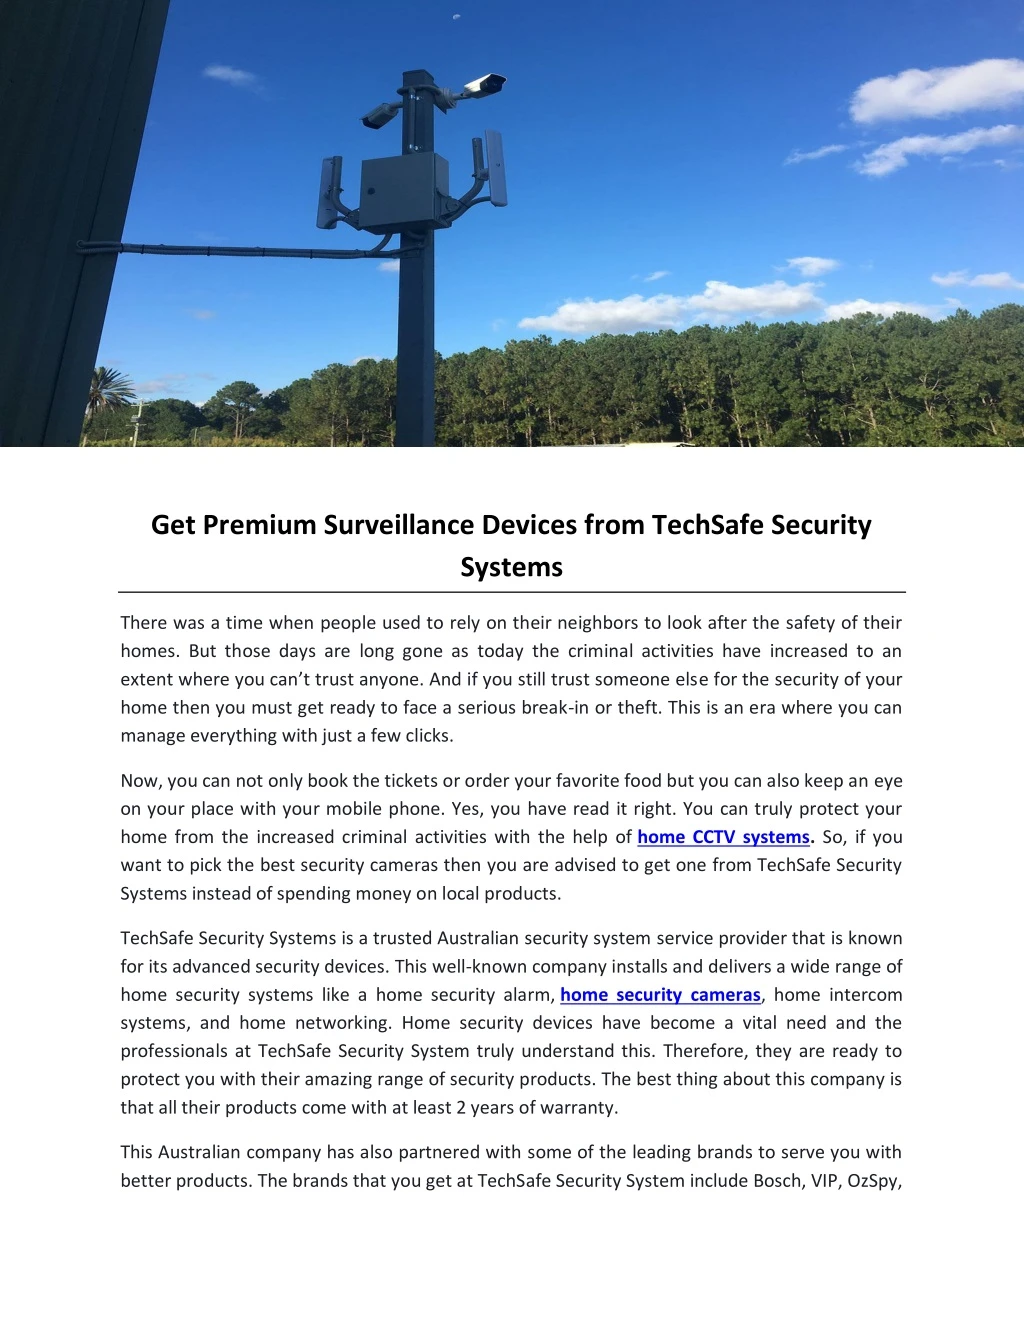 get premium surveillance devices from techsafe